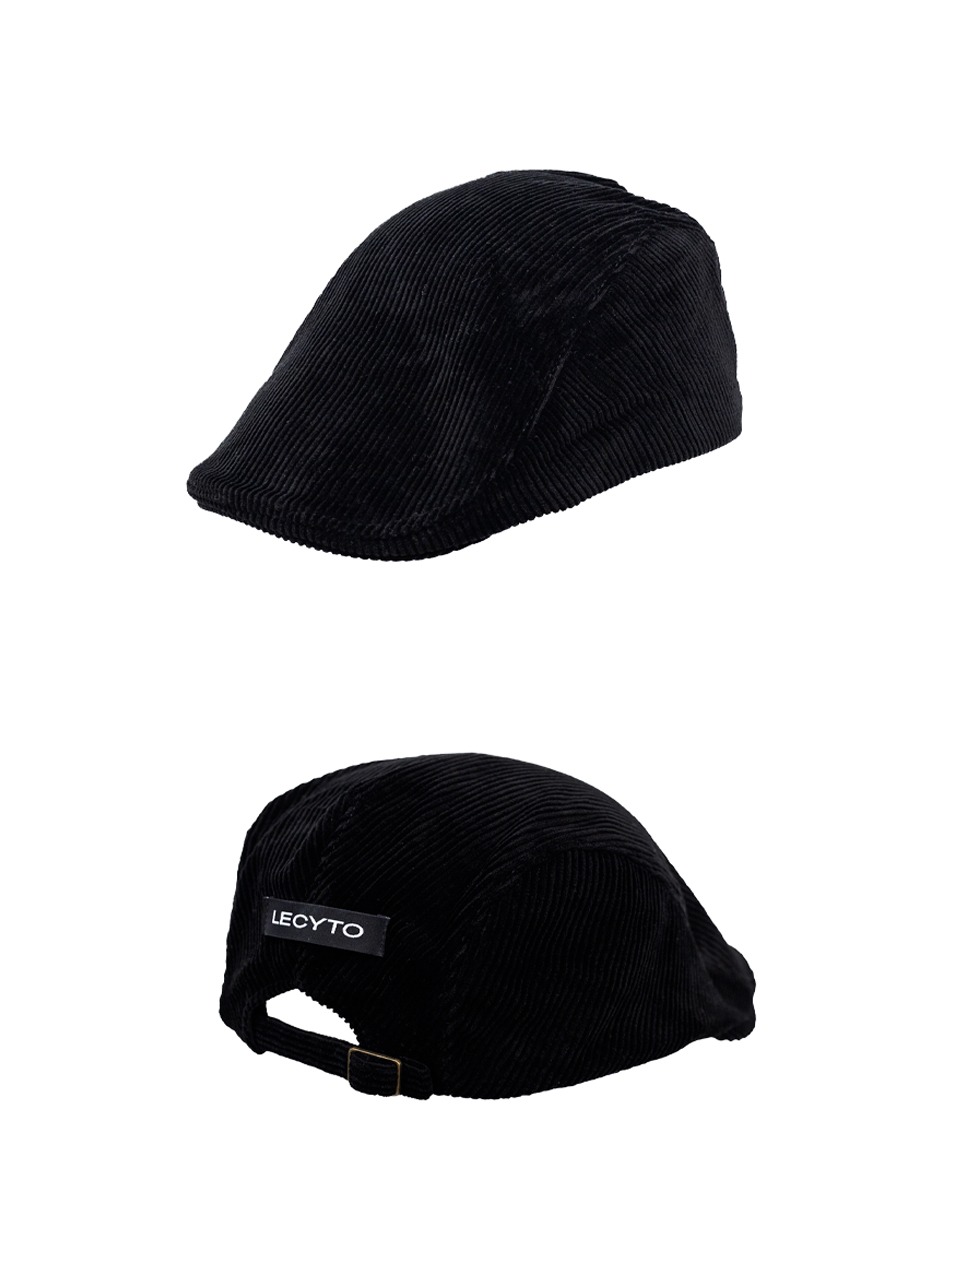 LECYTO - CORDUROY LOGO HUNTING CAP (BLACK)